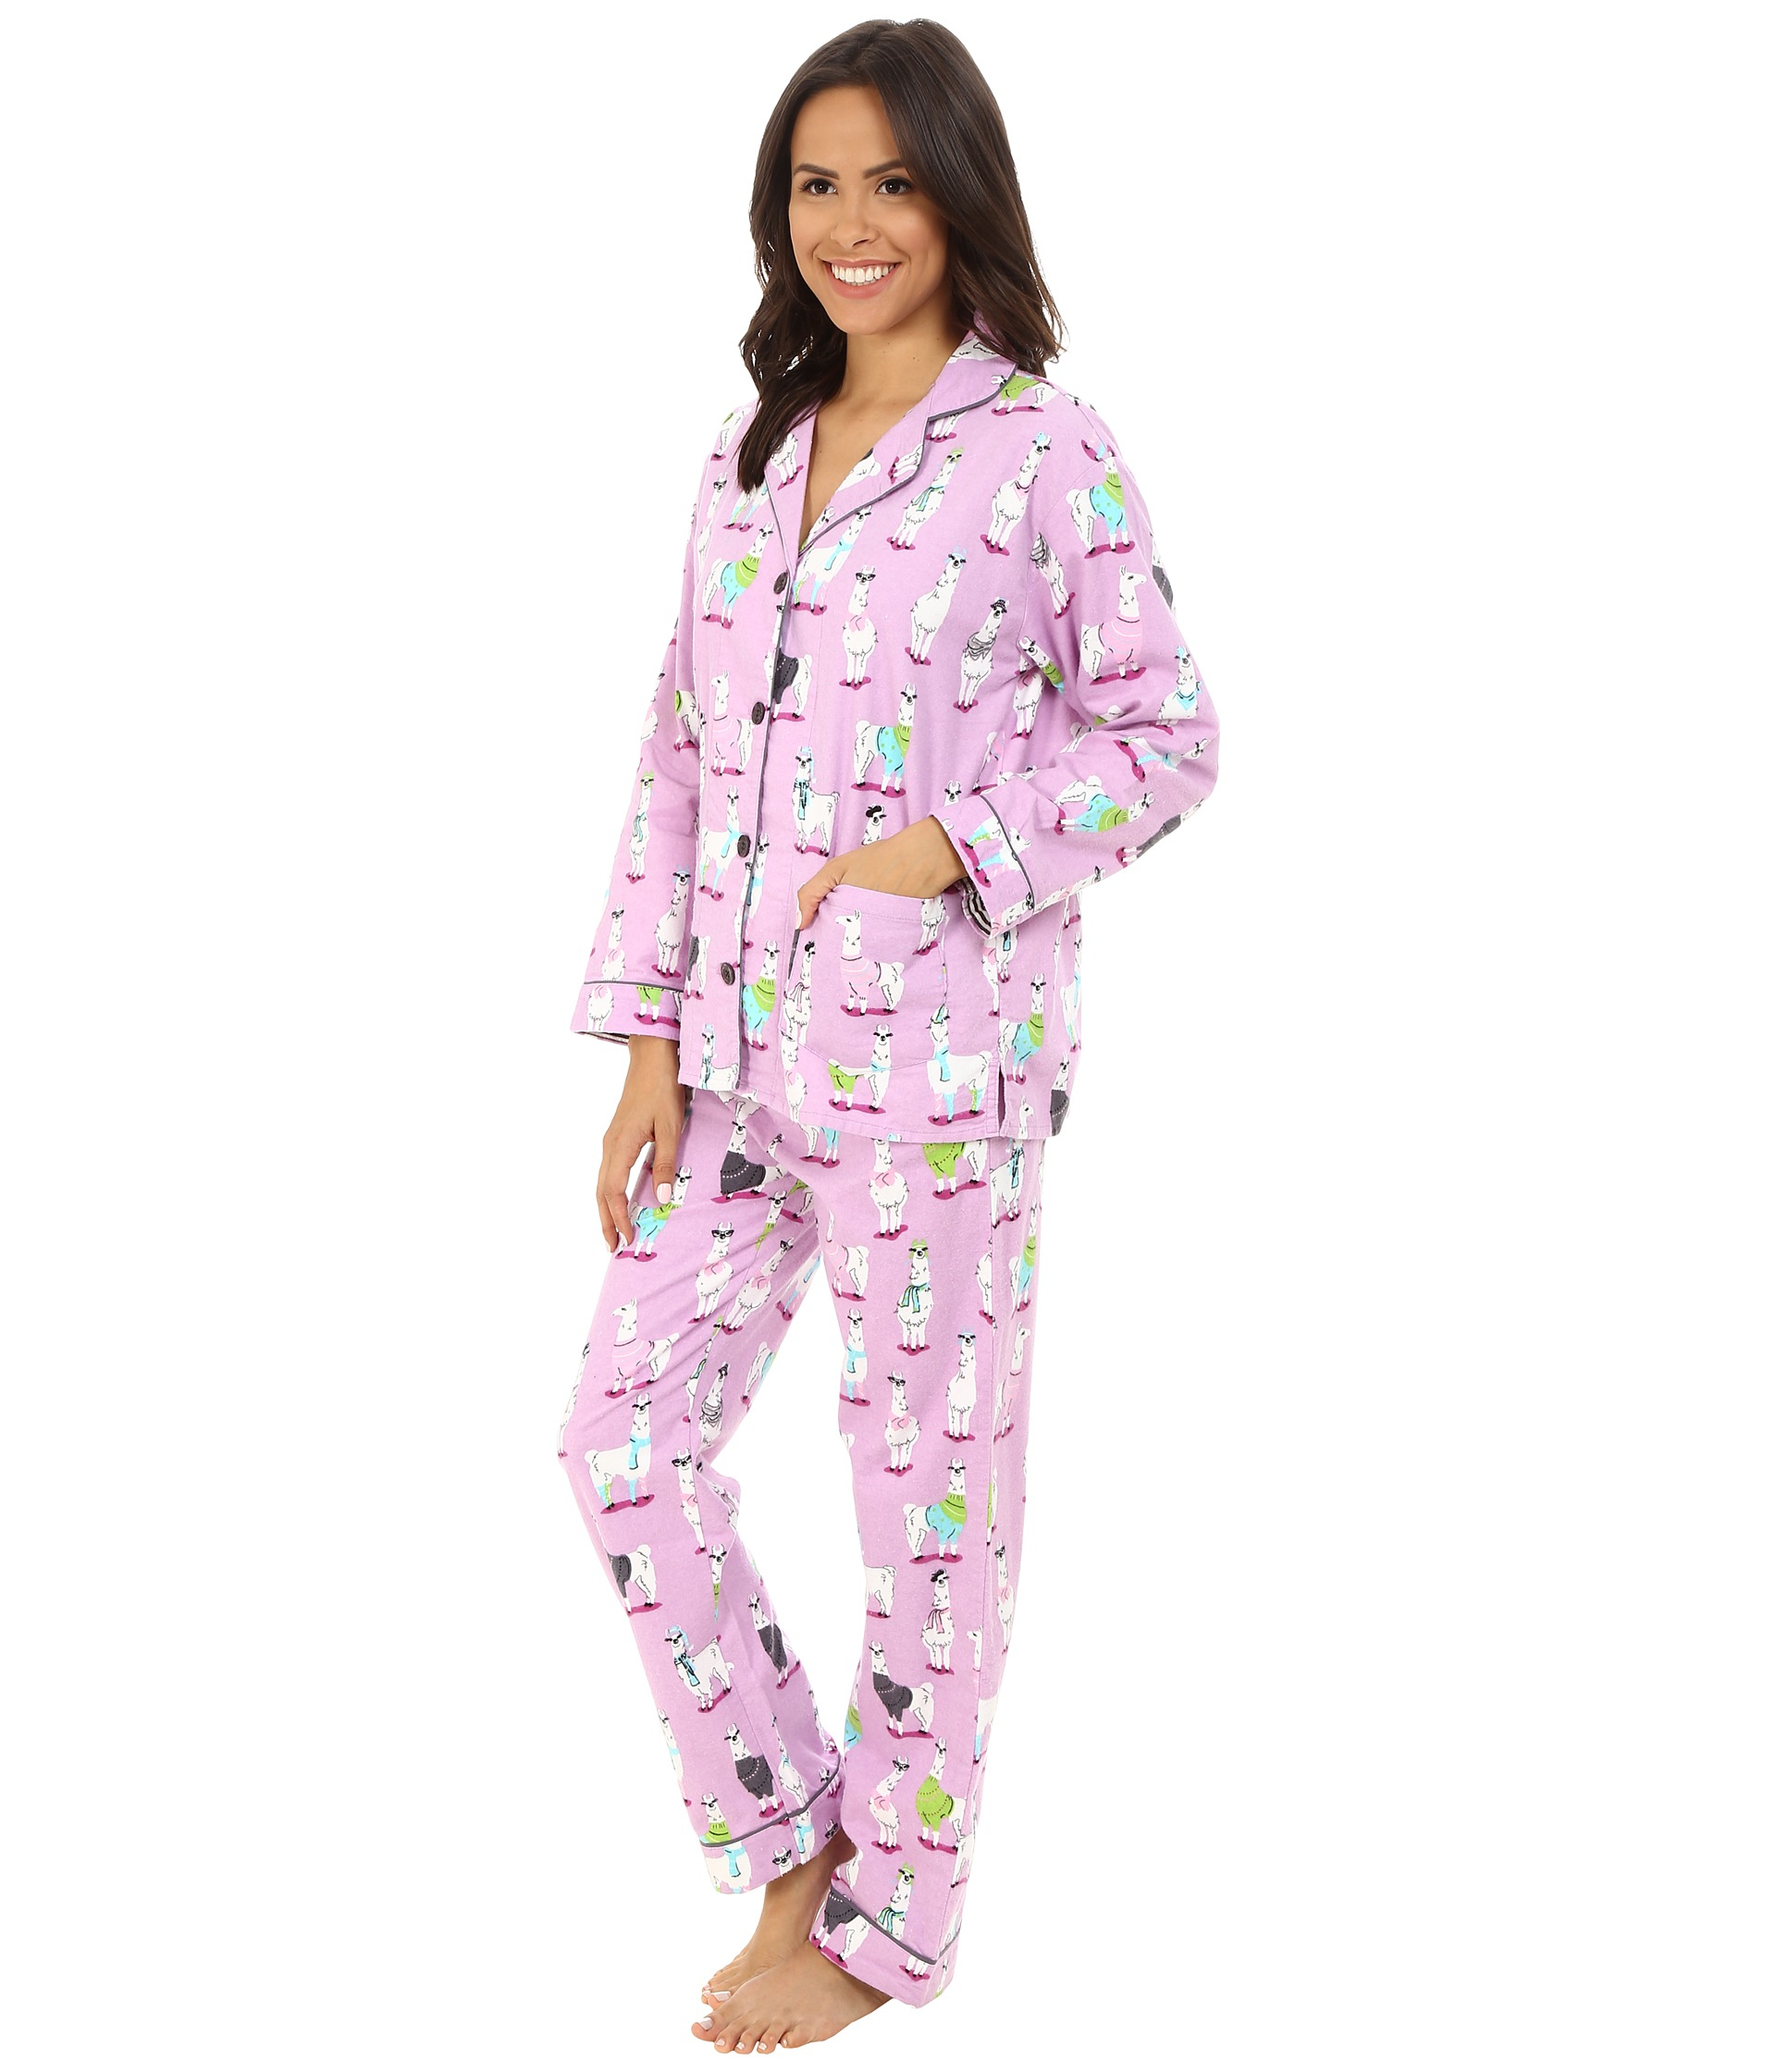 PJ Salvage Printed Flannel Pajama Set